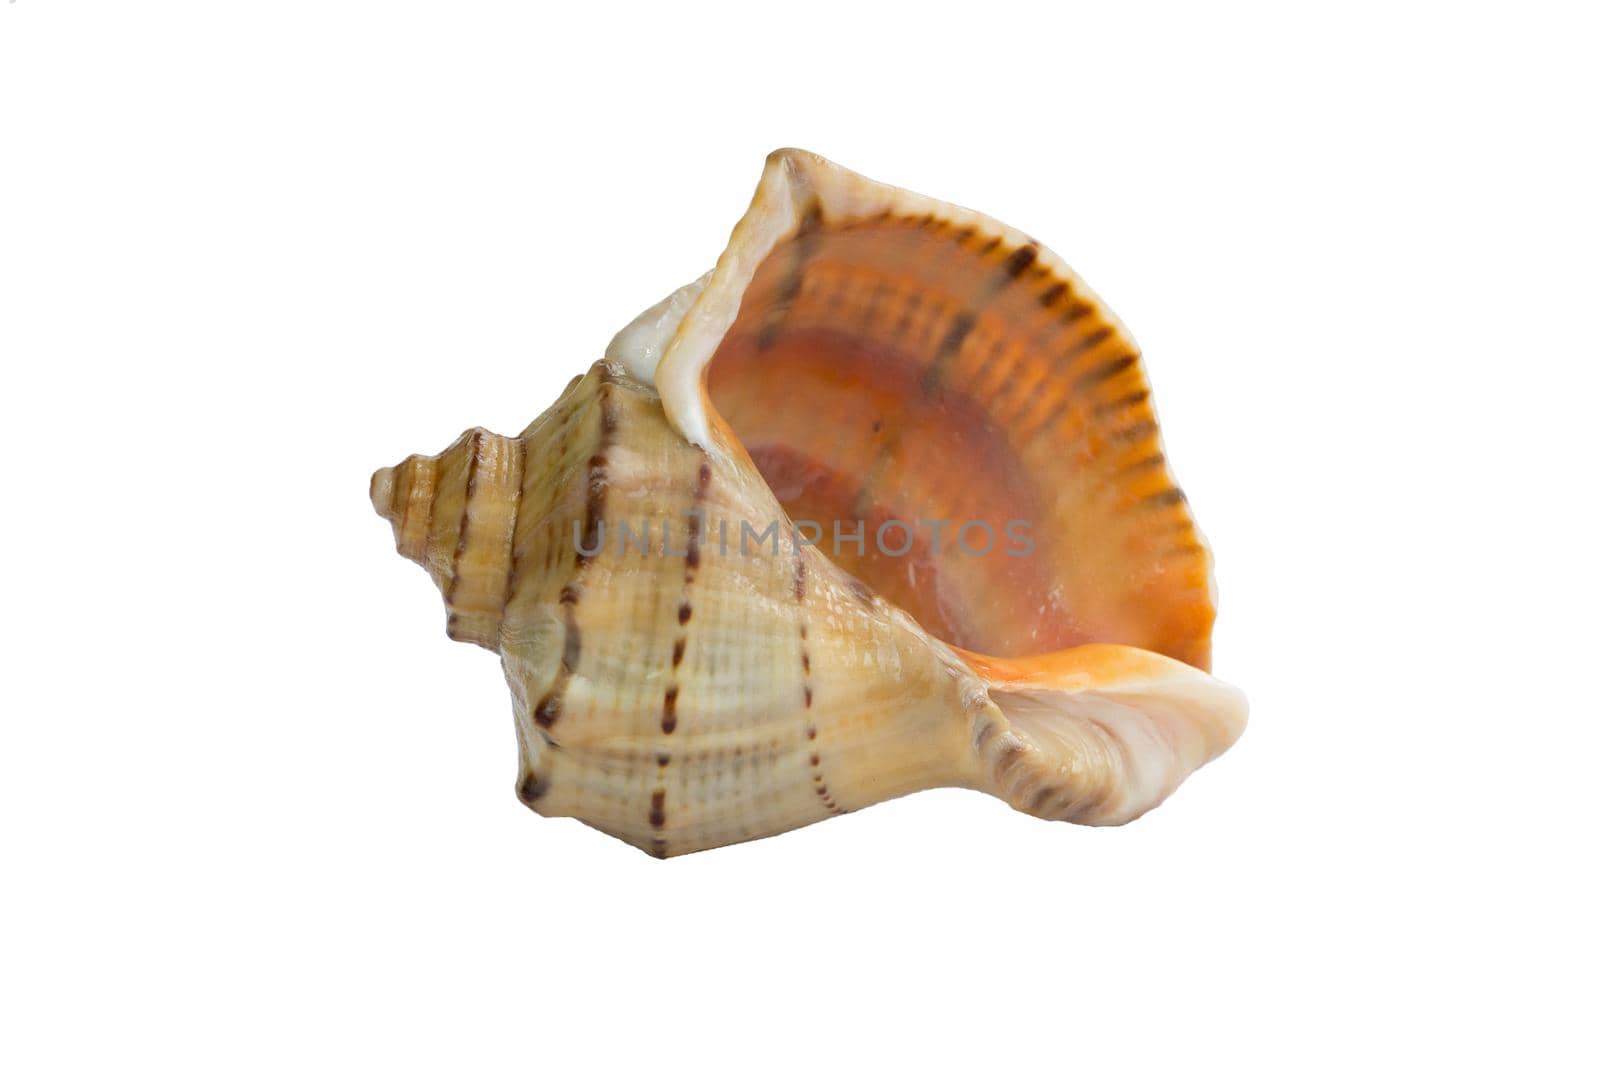 Big light bright yellow gastropod seashell close-up on white background by VeraVerano